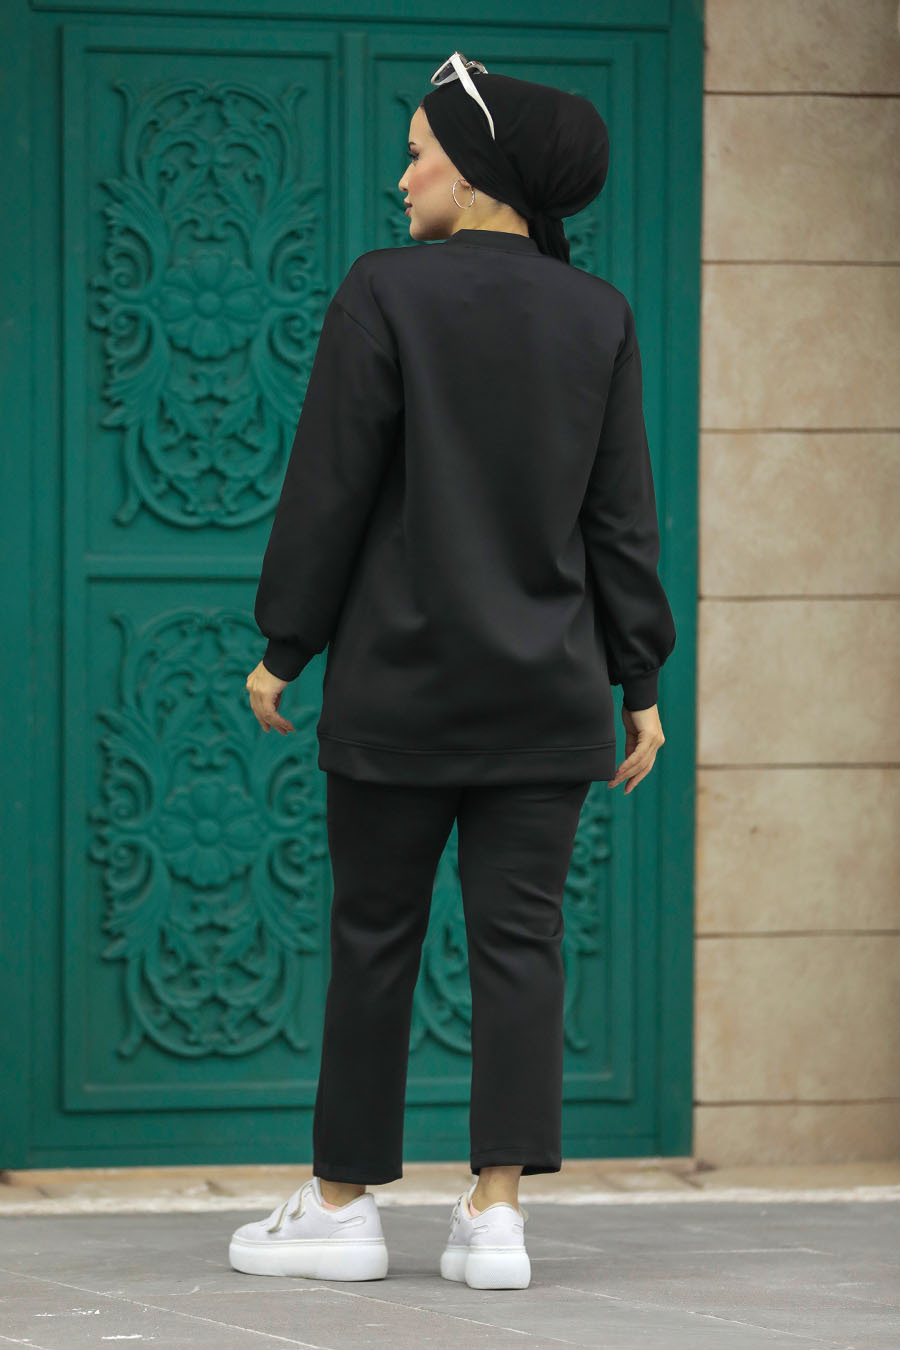 Neva Style - Black High Quality Dual Suit 7097S